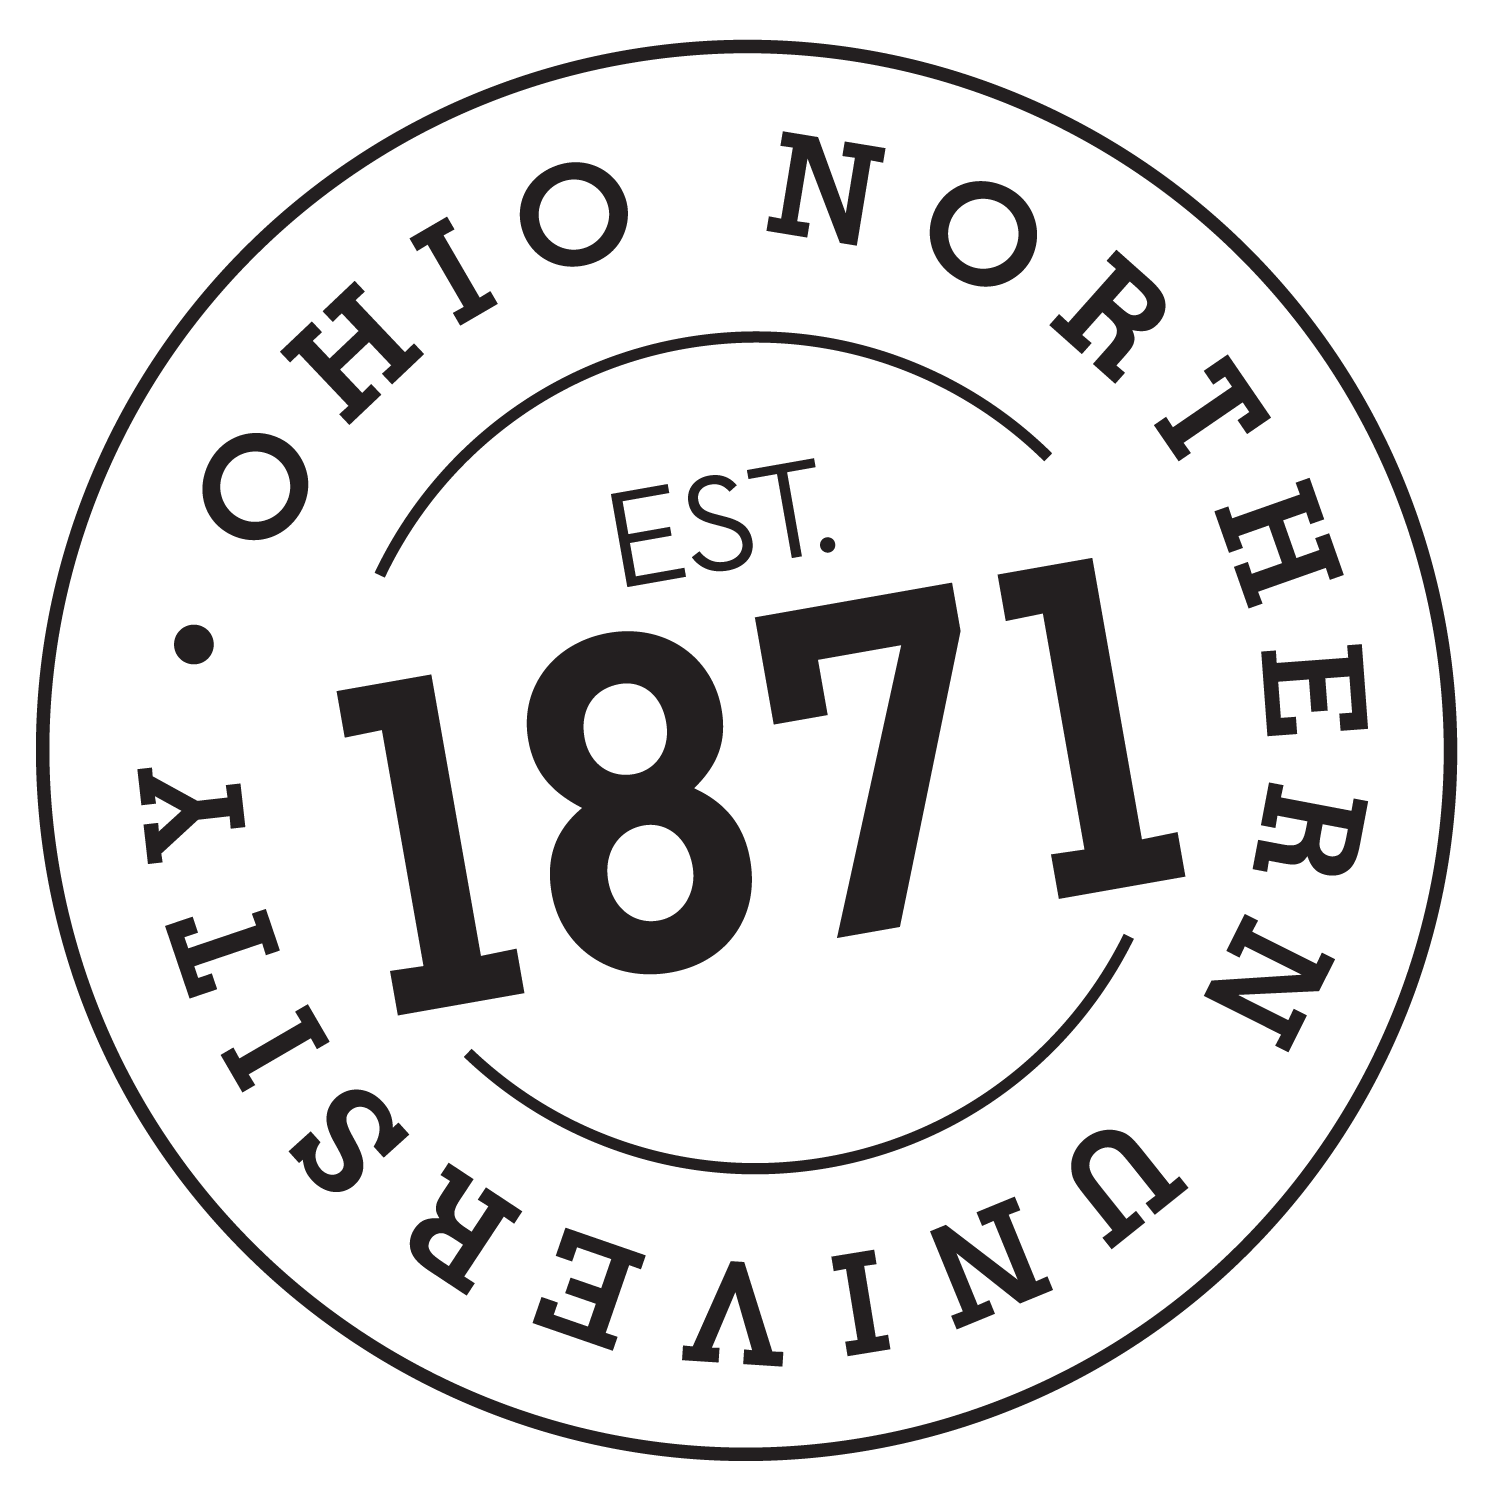 Ohio Northern University Established in 1871